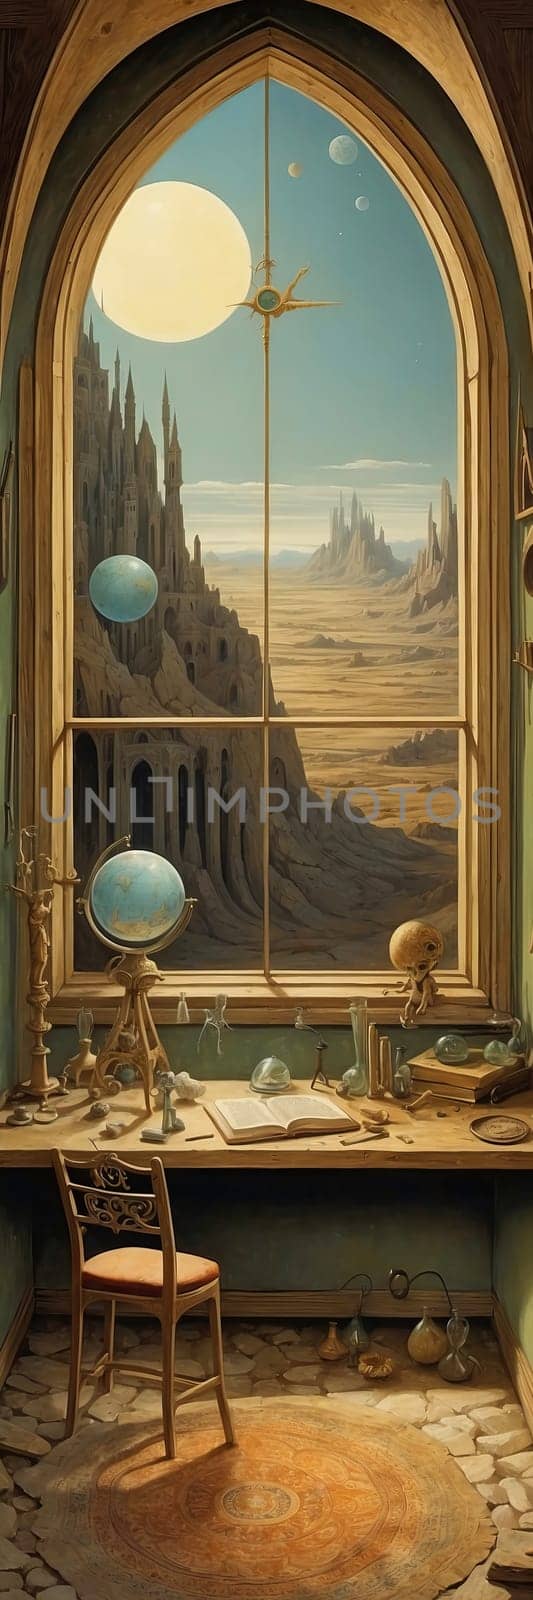 Desert View Room by applesstock